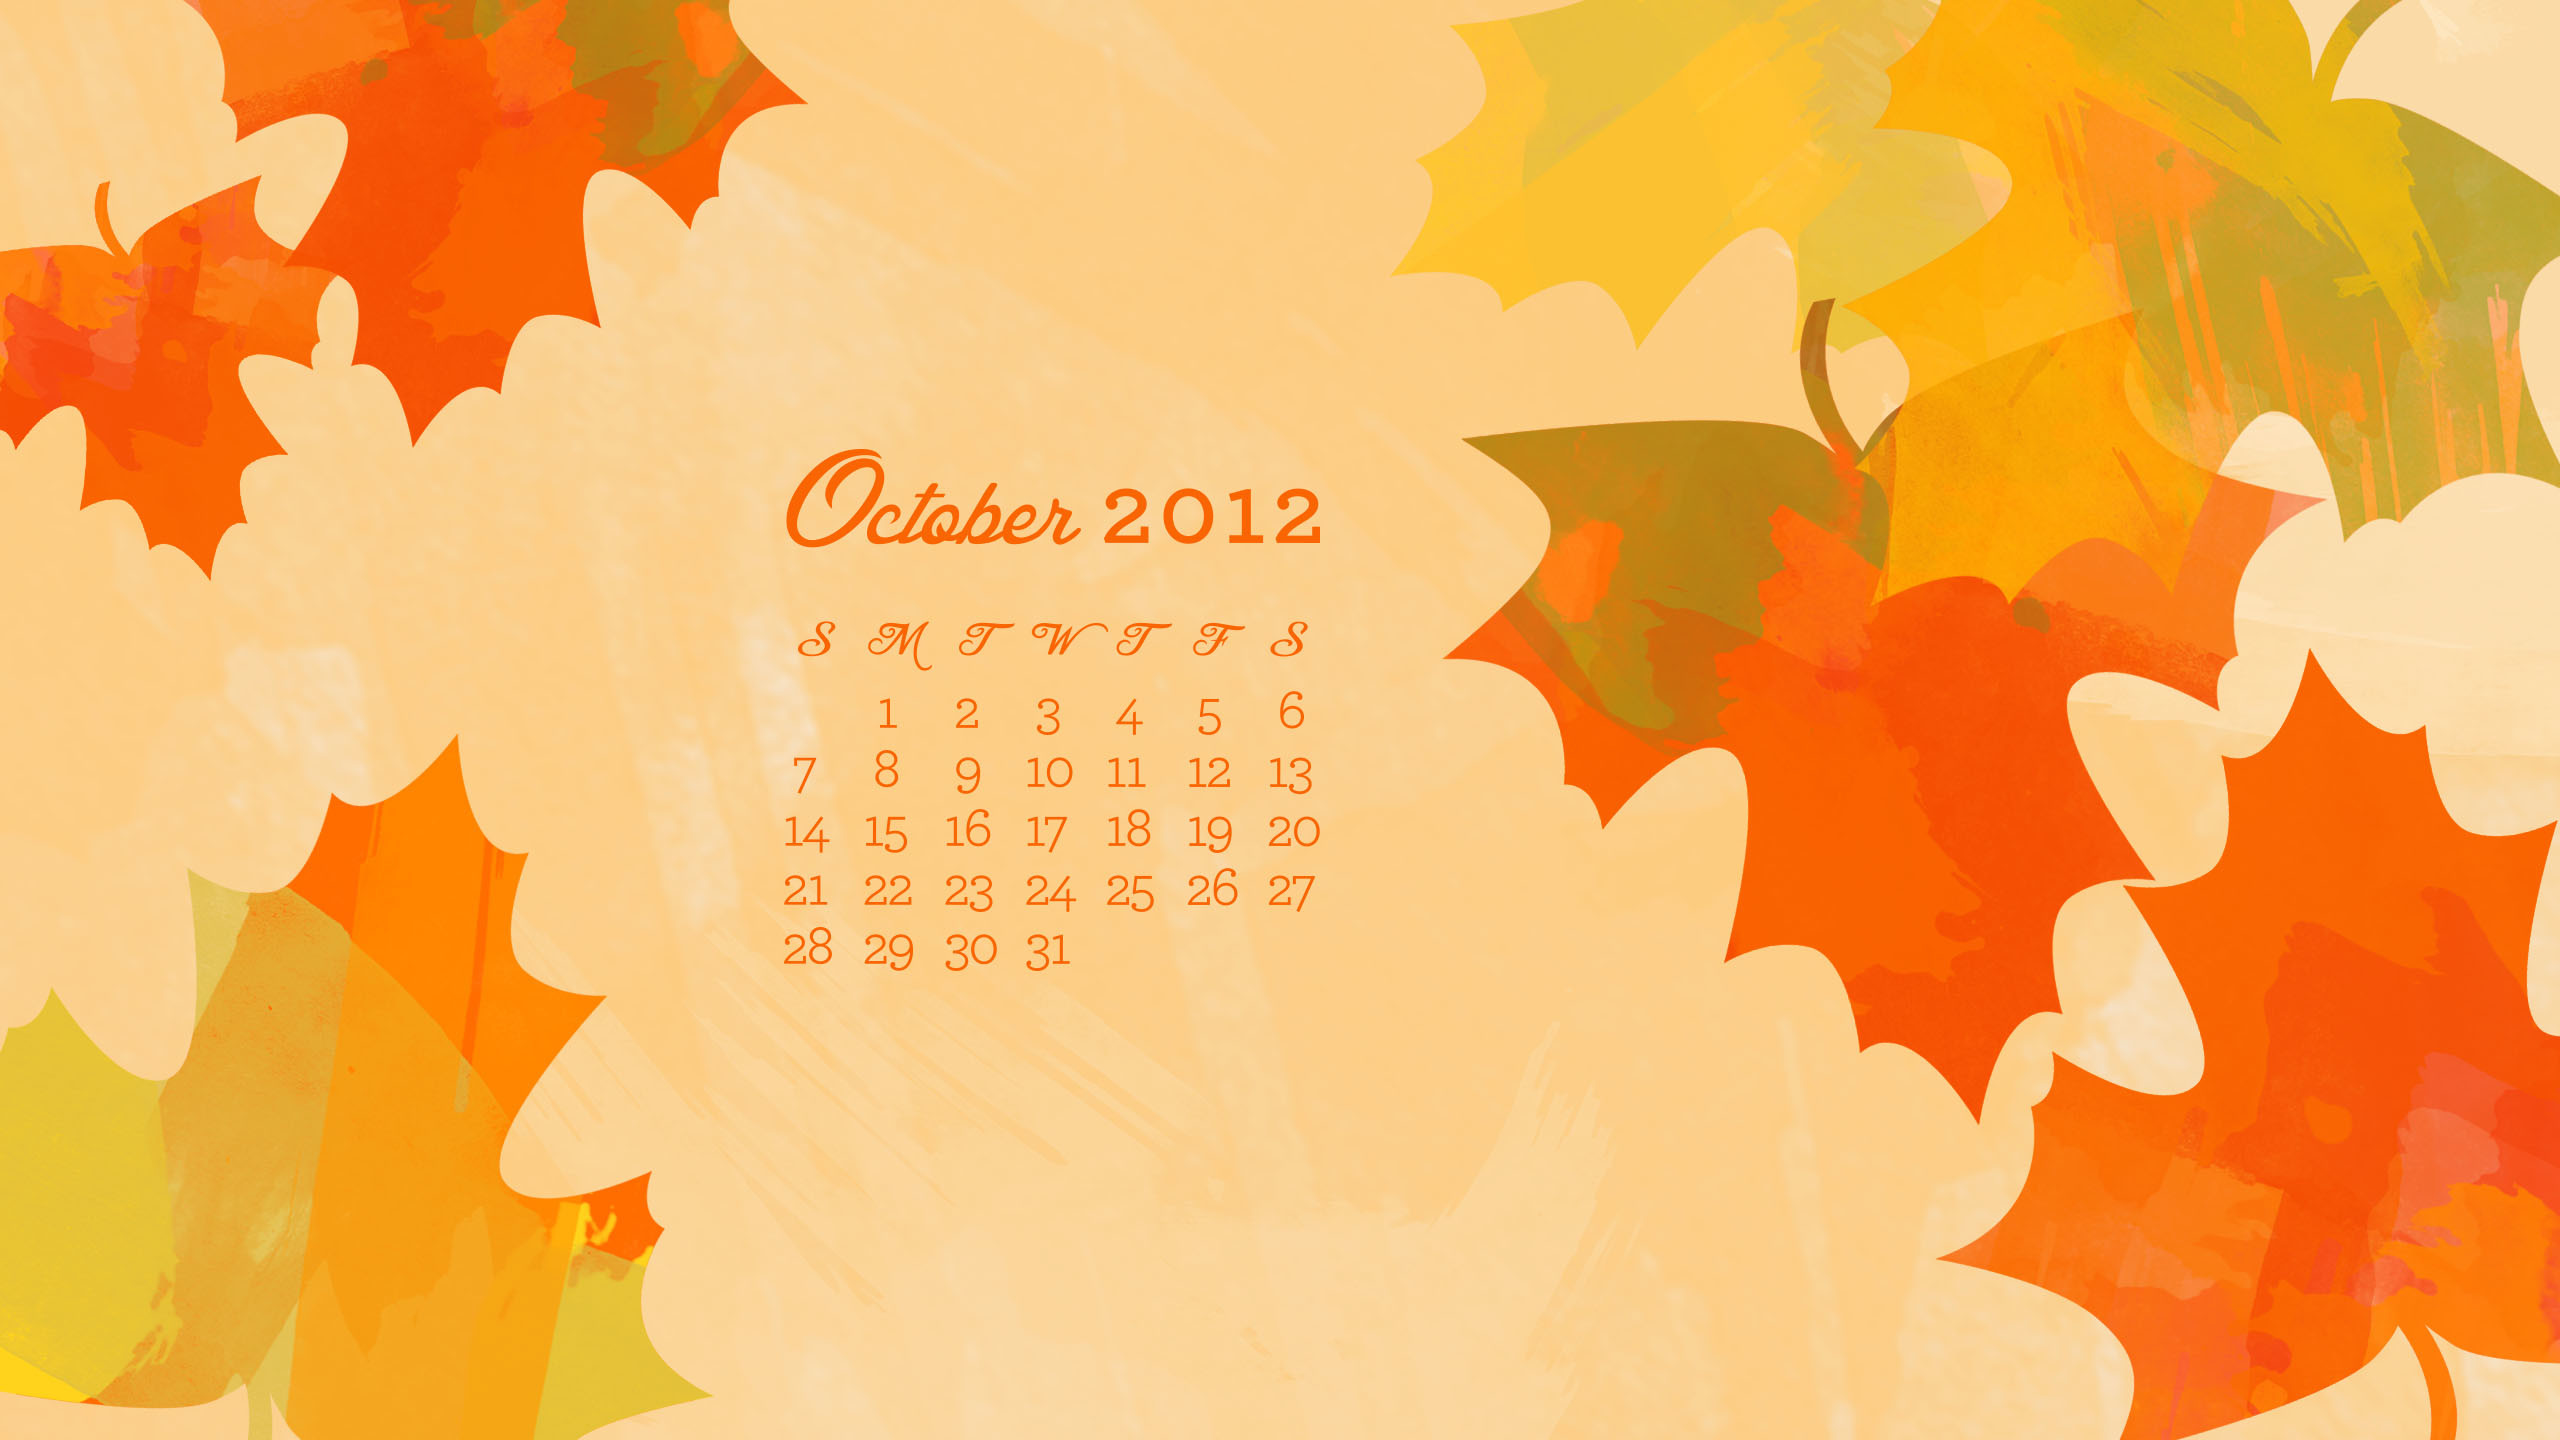 October 2012 Desktop, Iphone & Ipad Calendar Wallpaper - 2019 October Desktop Calendar - HD Wallpaper 